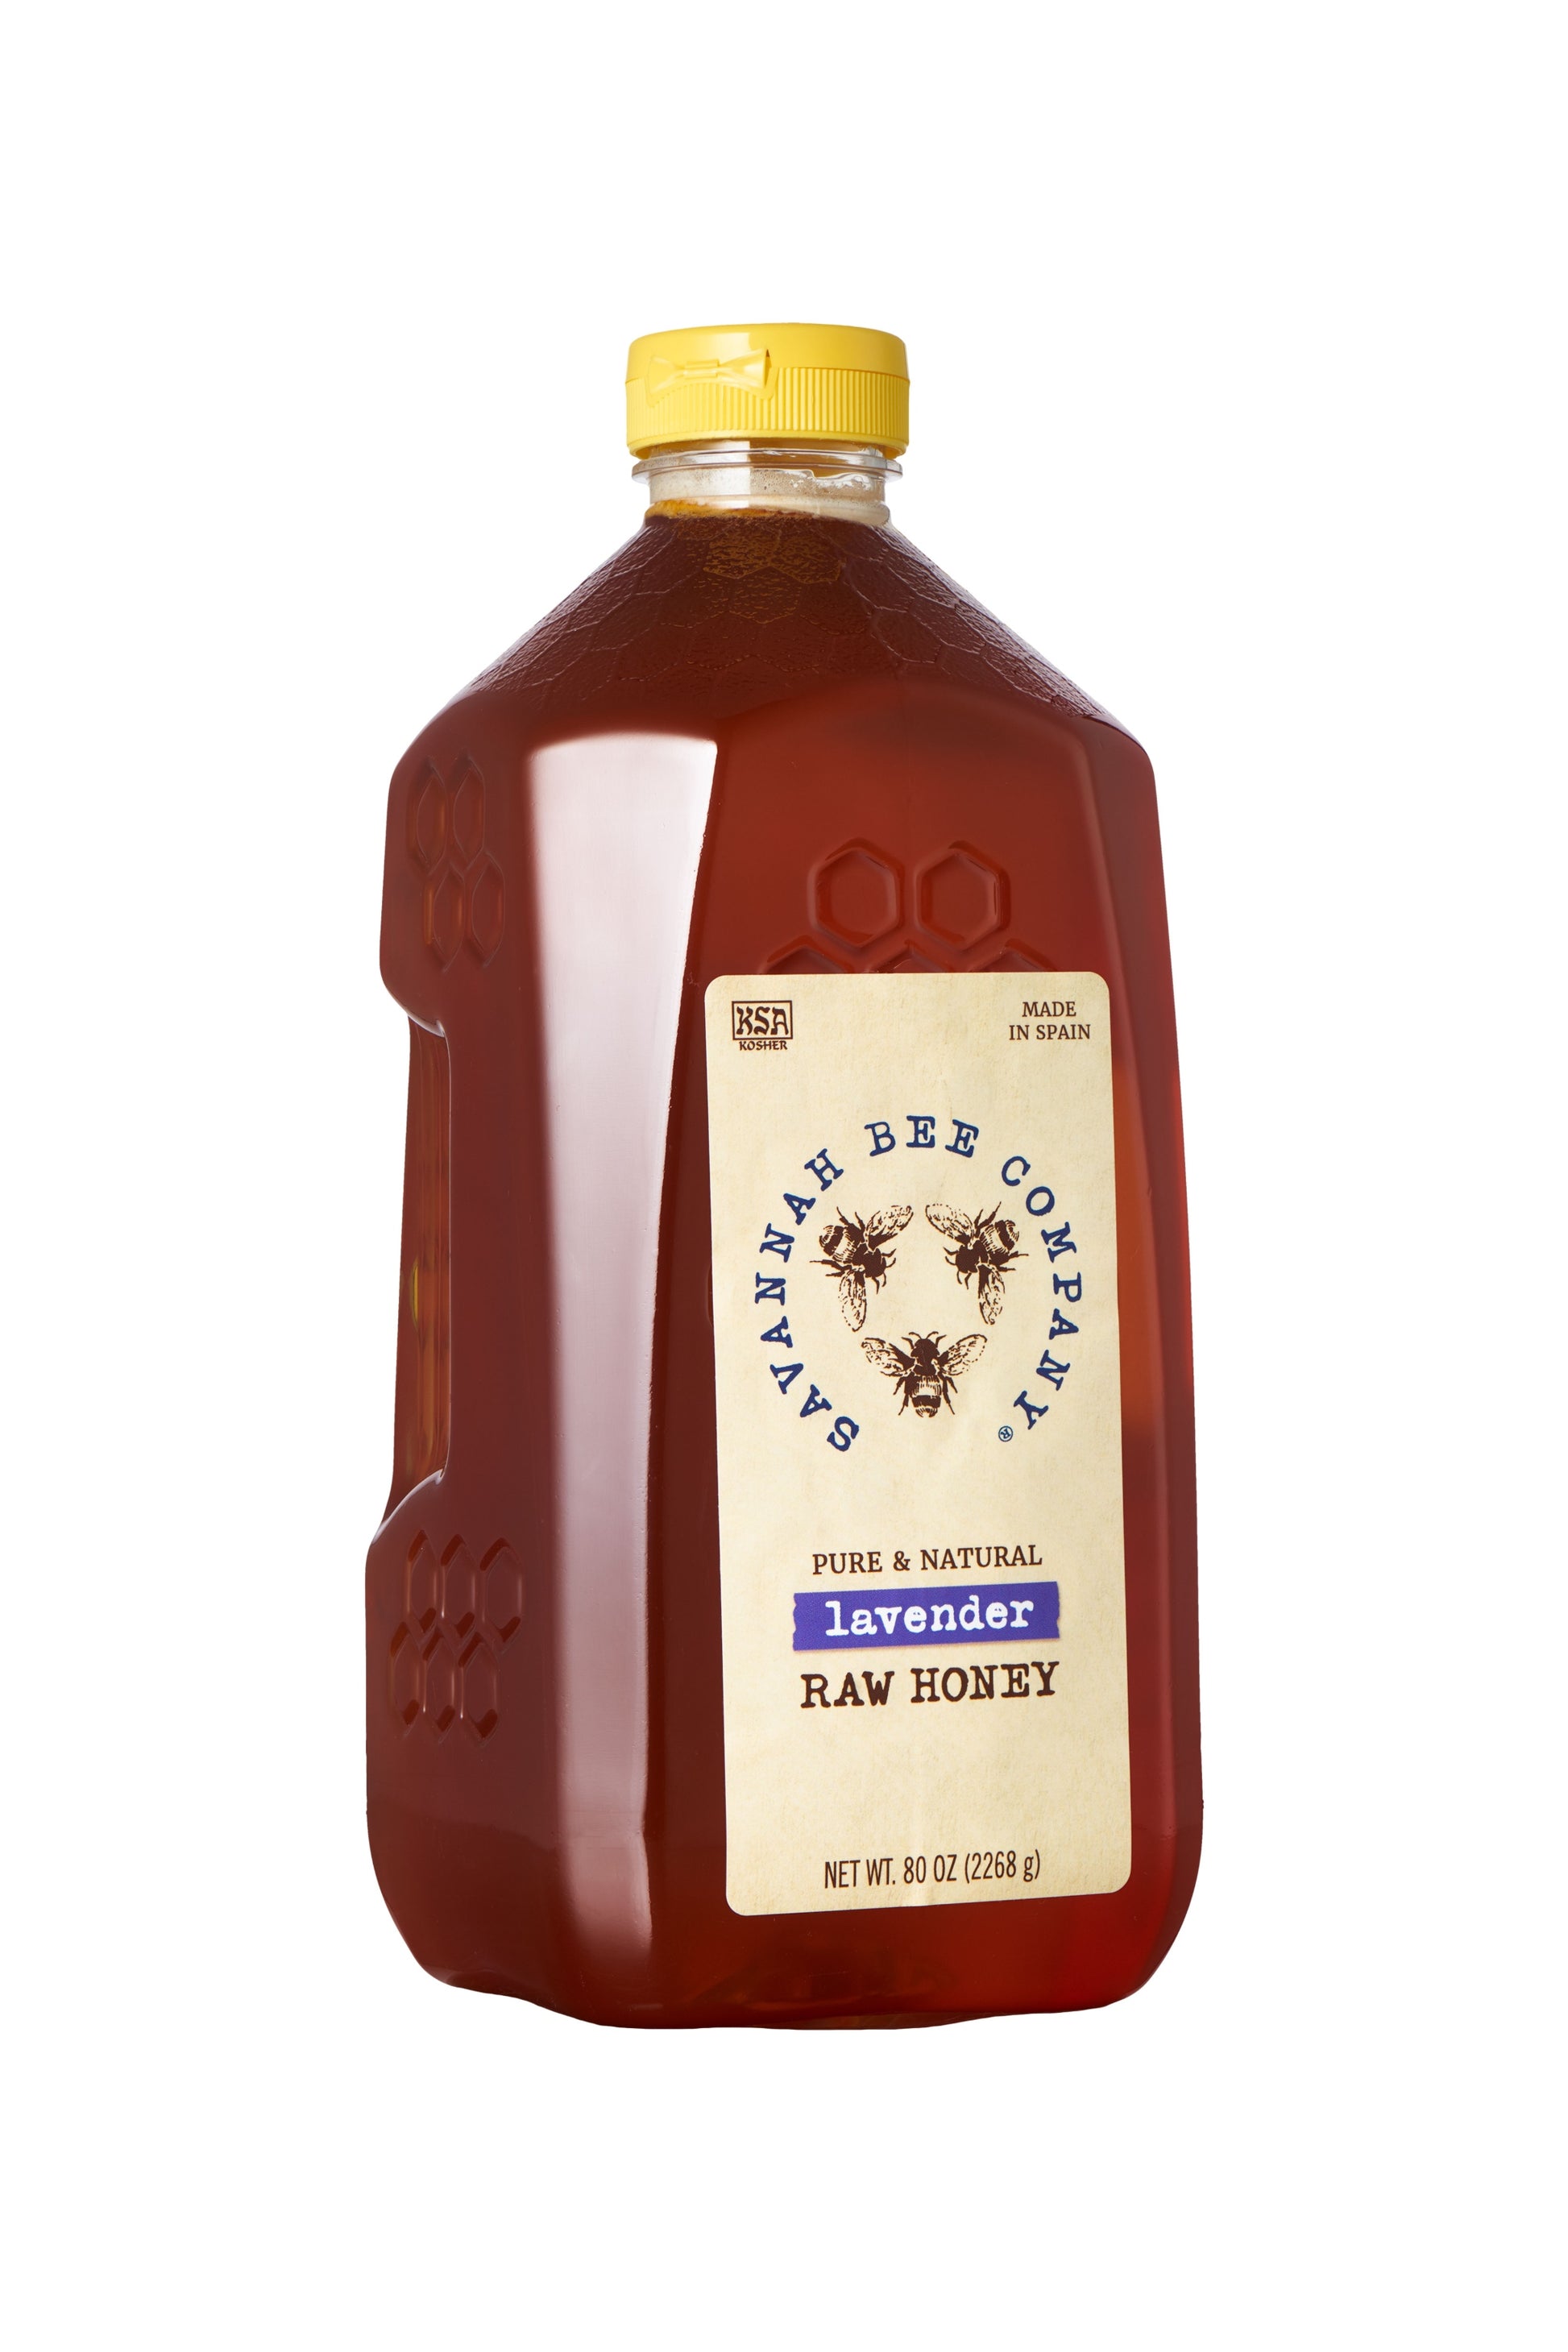 Pure & Natural Lavender Raw Honey 80 oz. gallon studio shot.